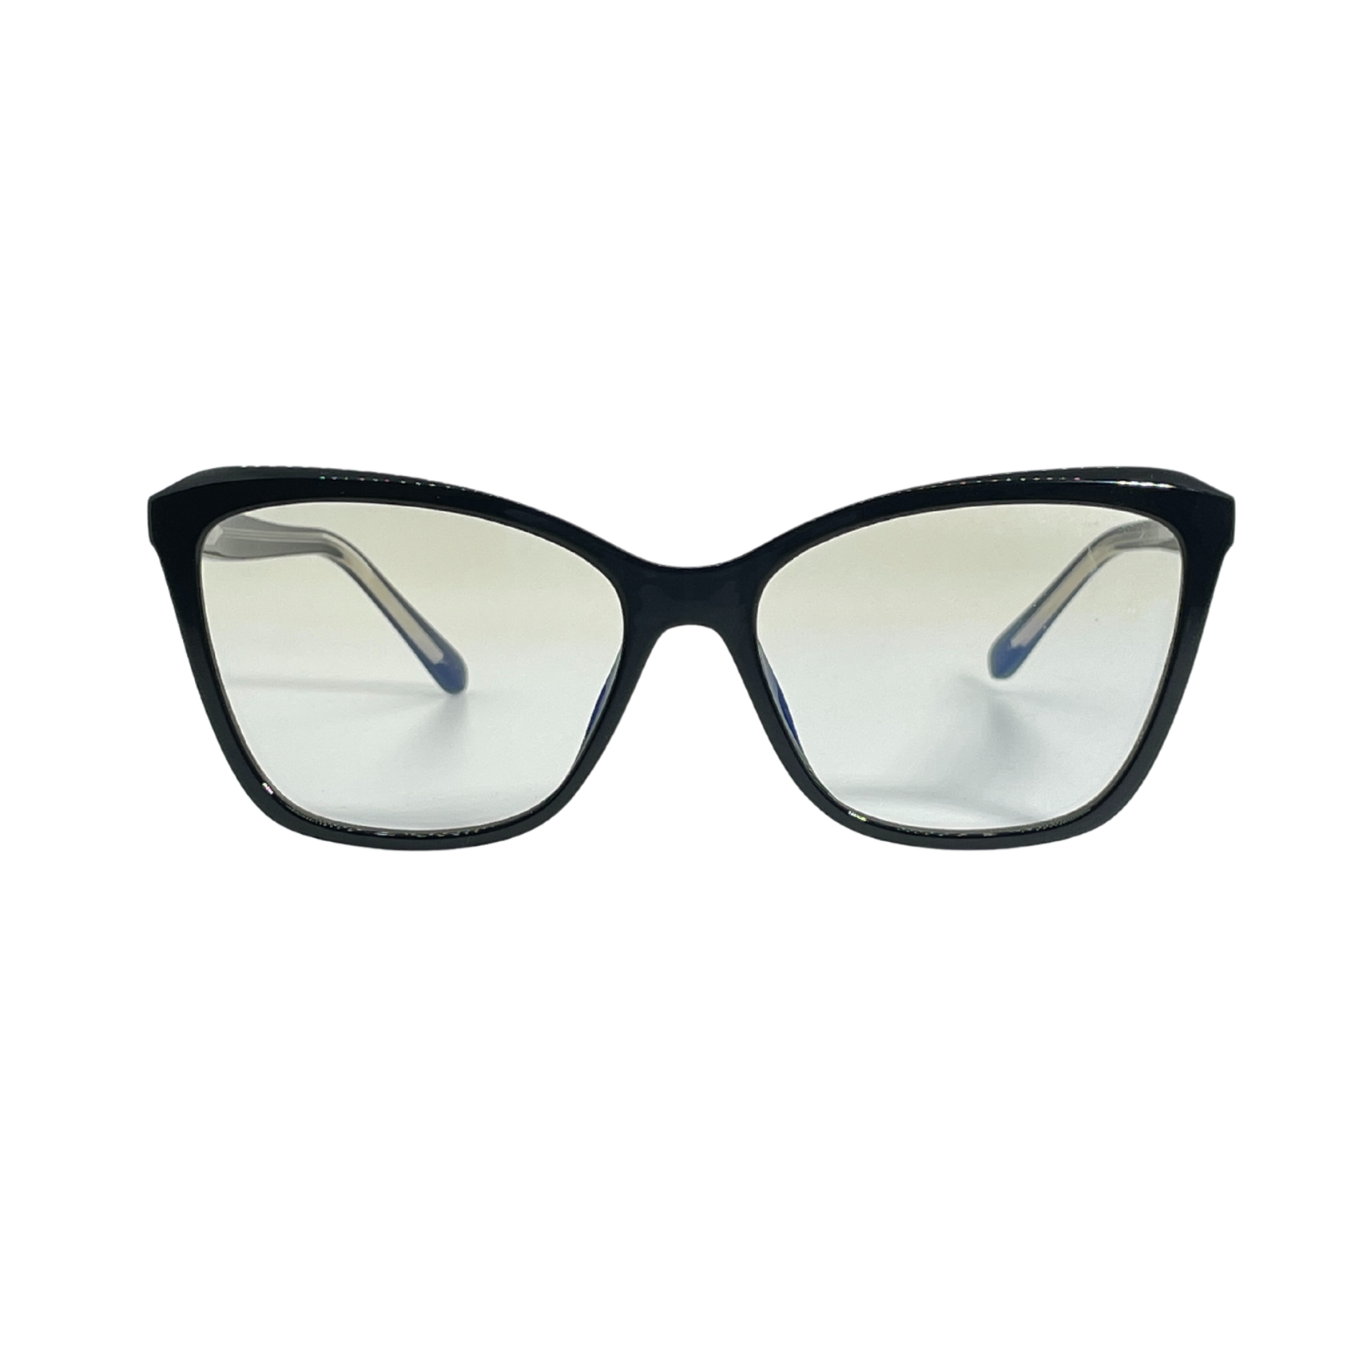 San Angelo Cat eye Blue Light Glasses - Woodensun Sunglasses | Eco-fashion eyewear